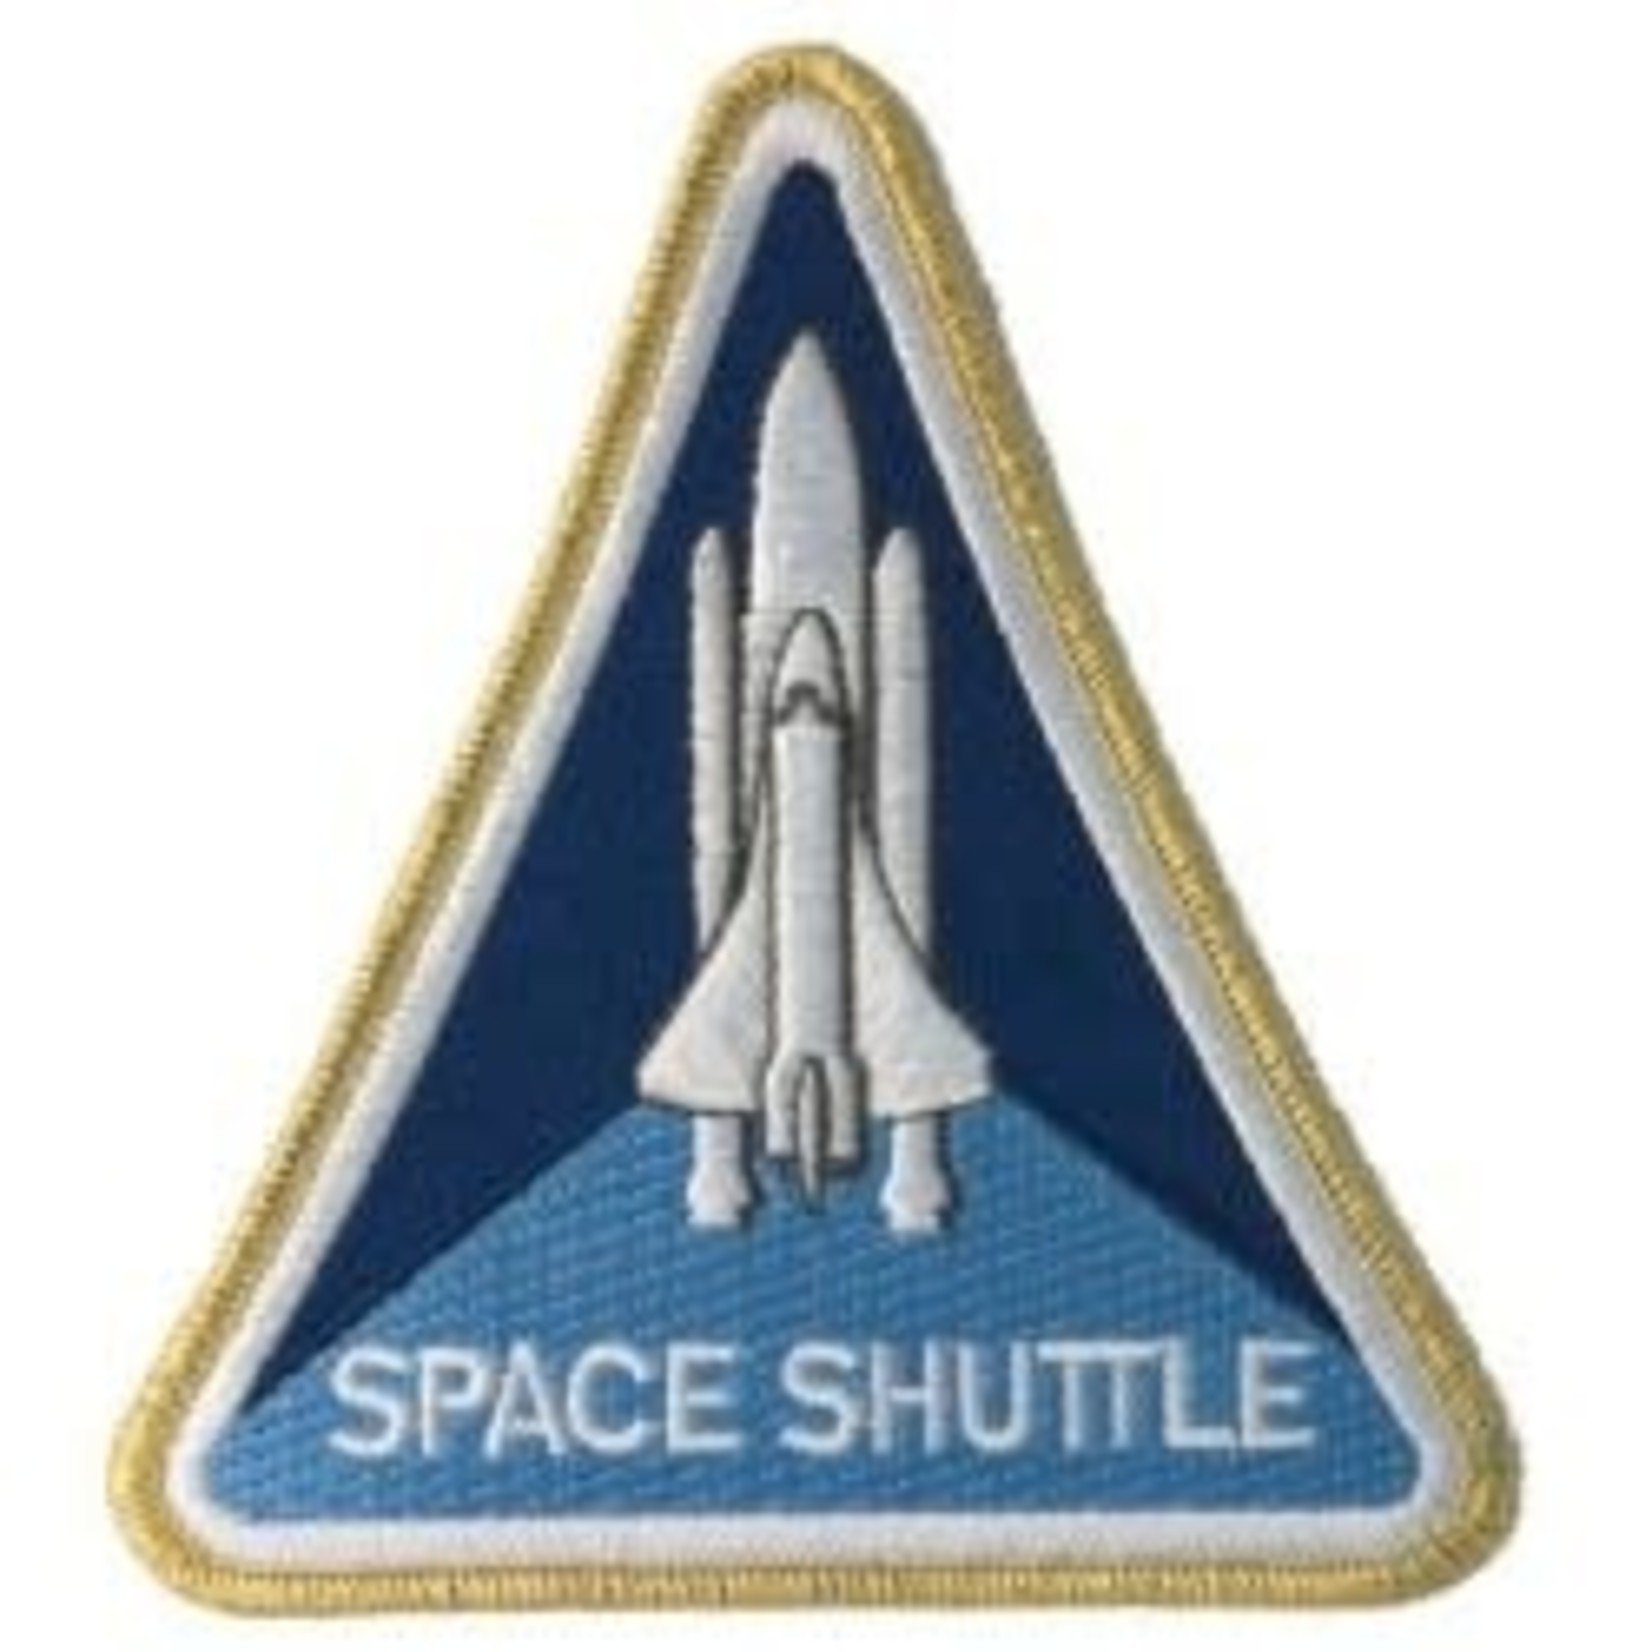 Canadian Space Agency Crest Shuttle Program